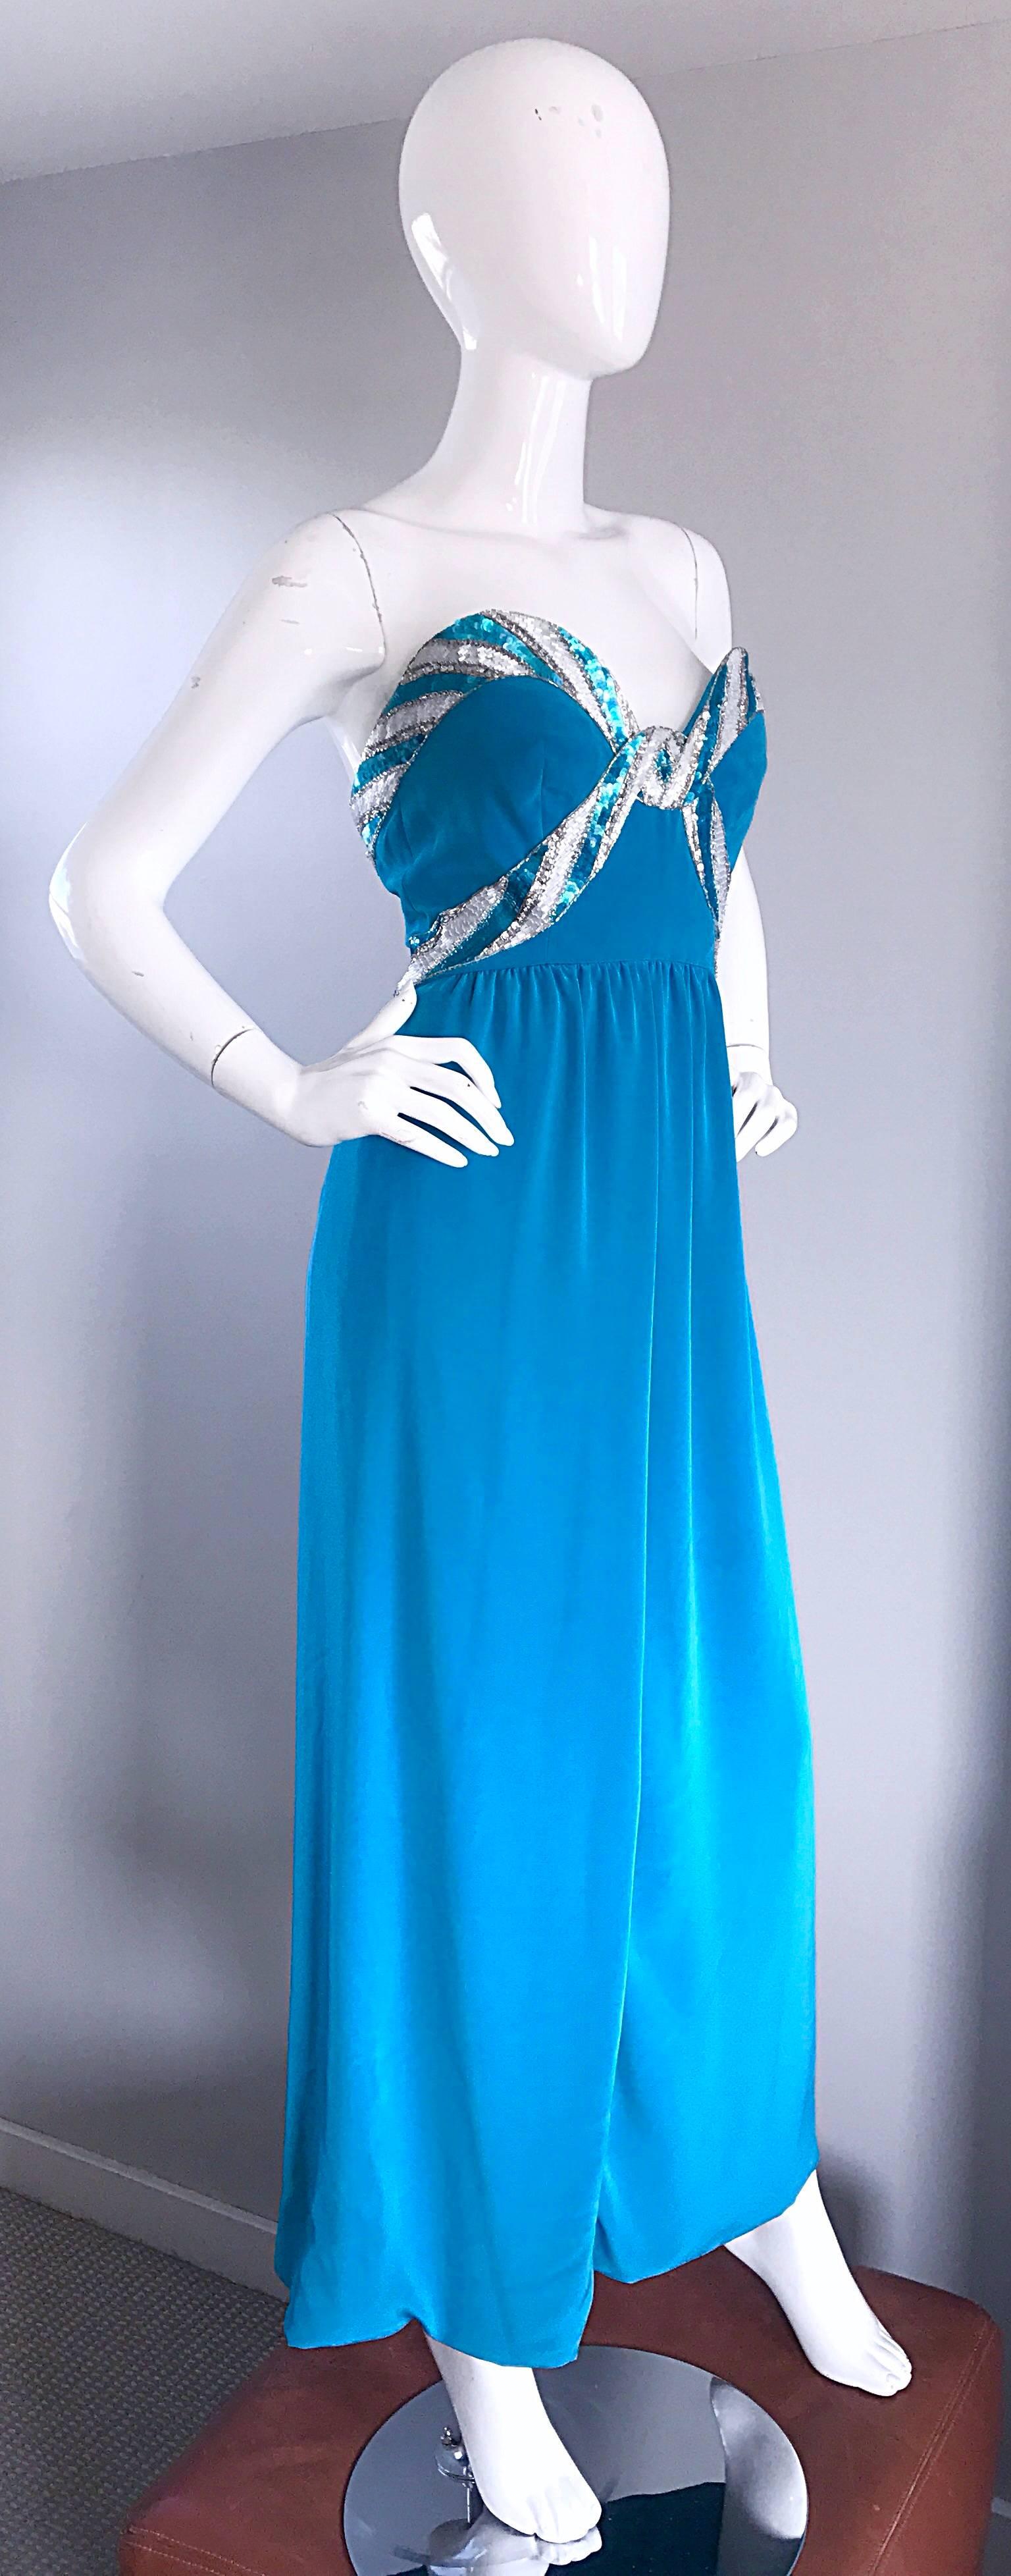 turquoise sequin dress